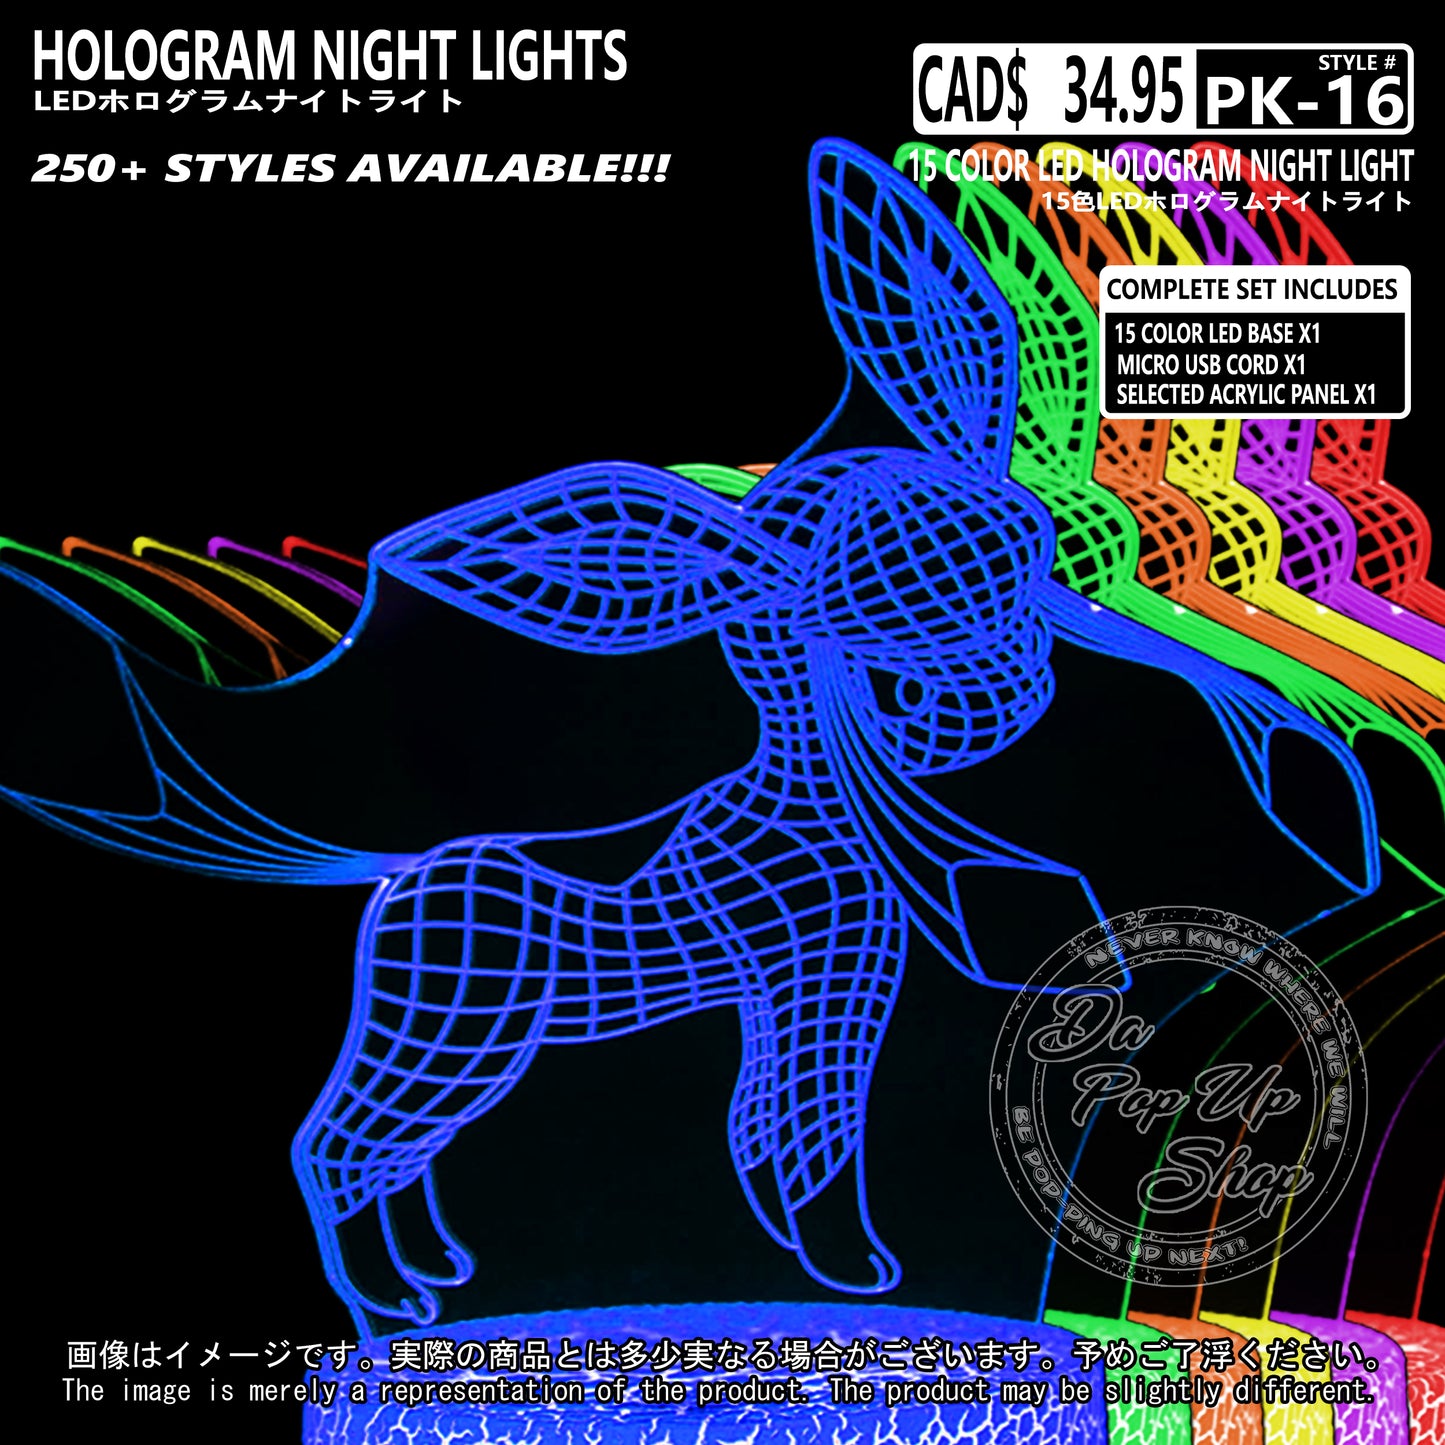 (PKM-16) GLACEON Pokemon Hologram LED Night Light